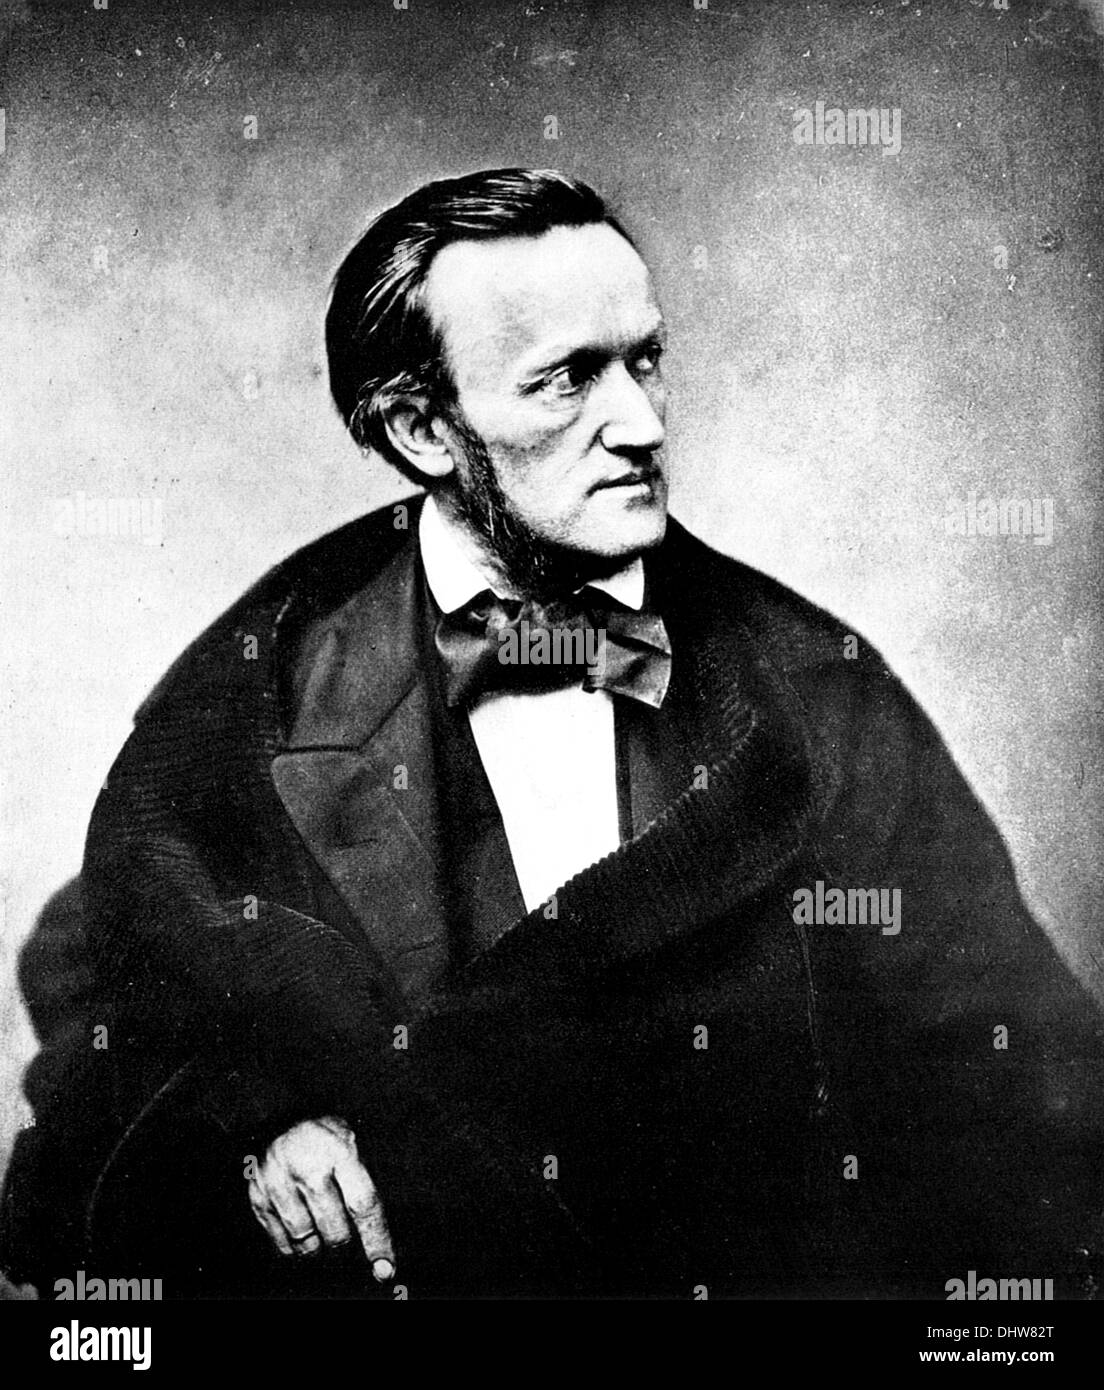 Richard Wagner, compositeur allemand, 1861 Banque D'Images